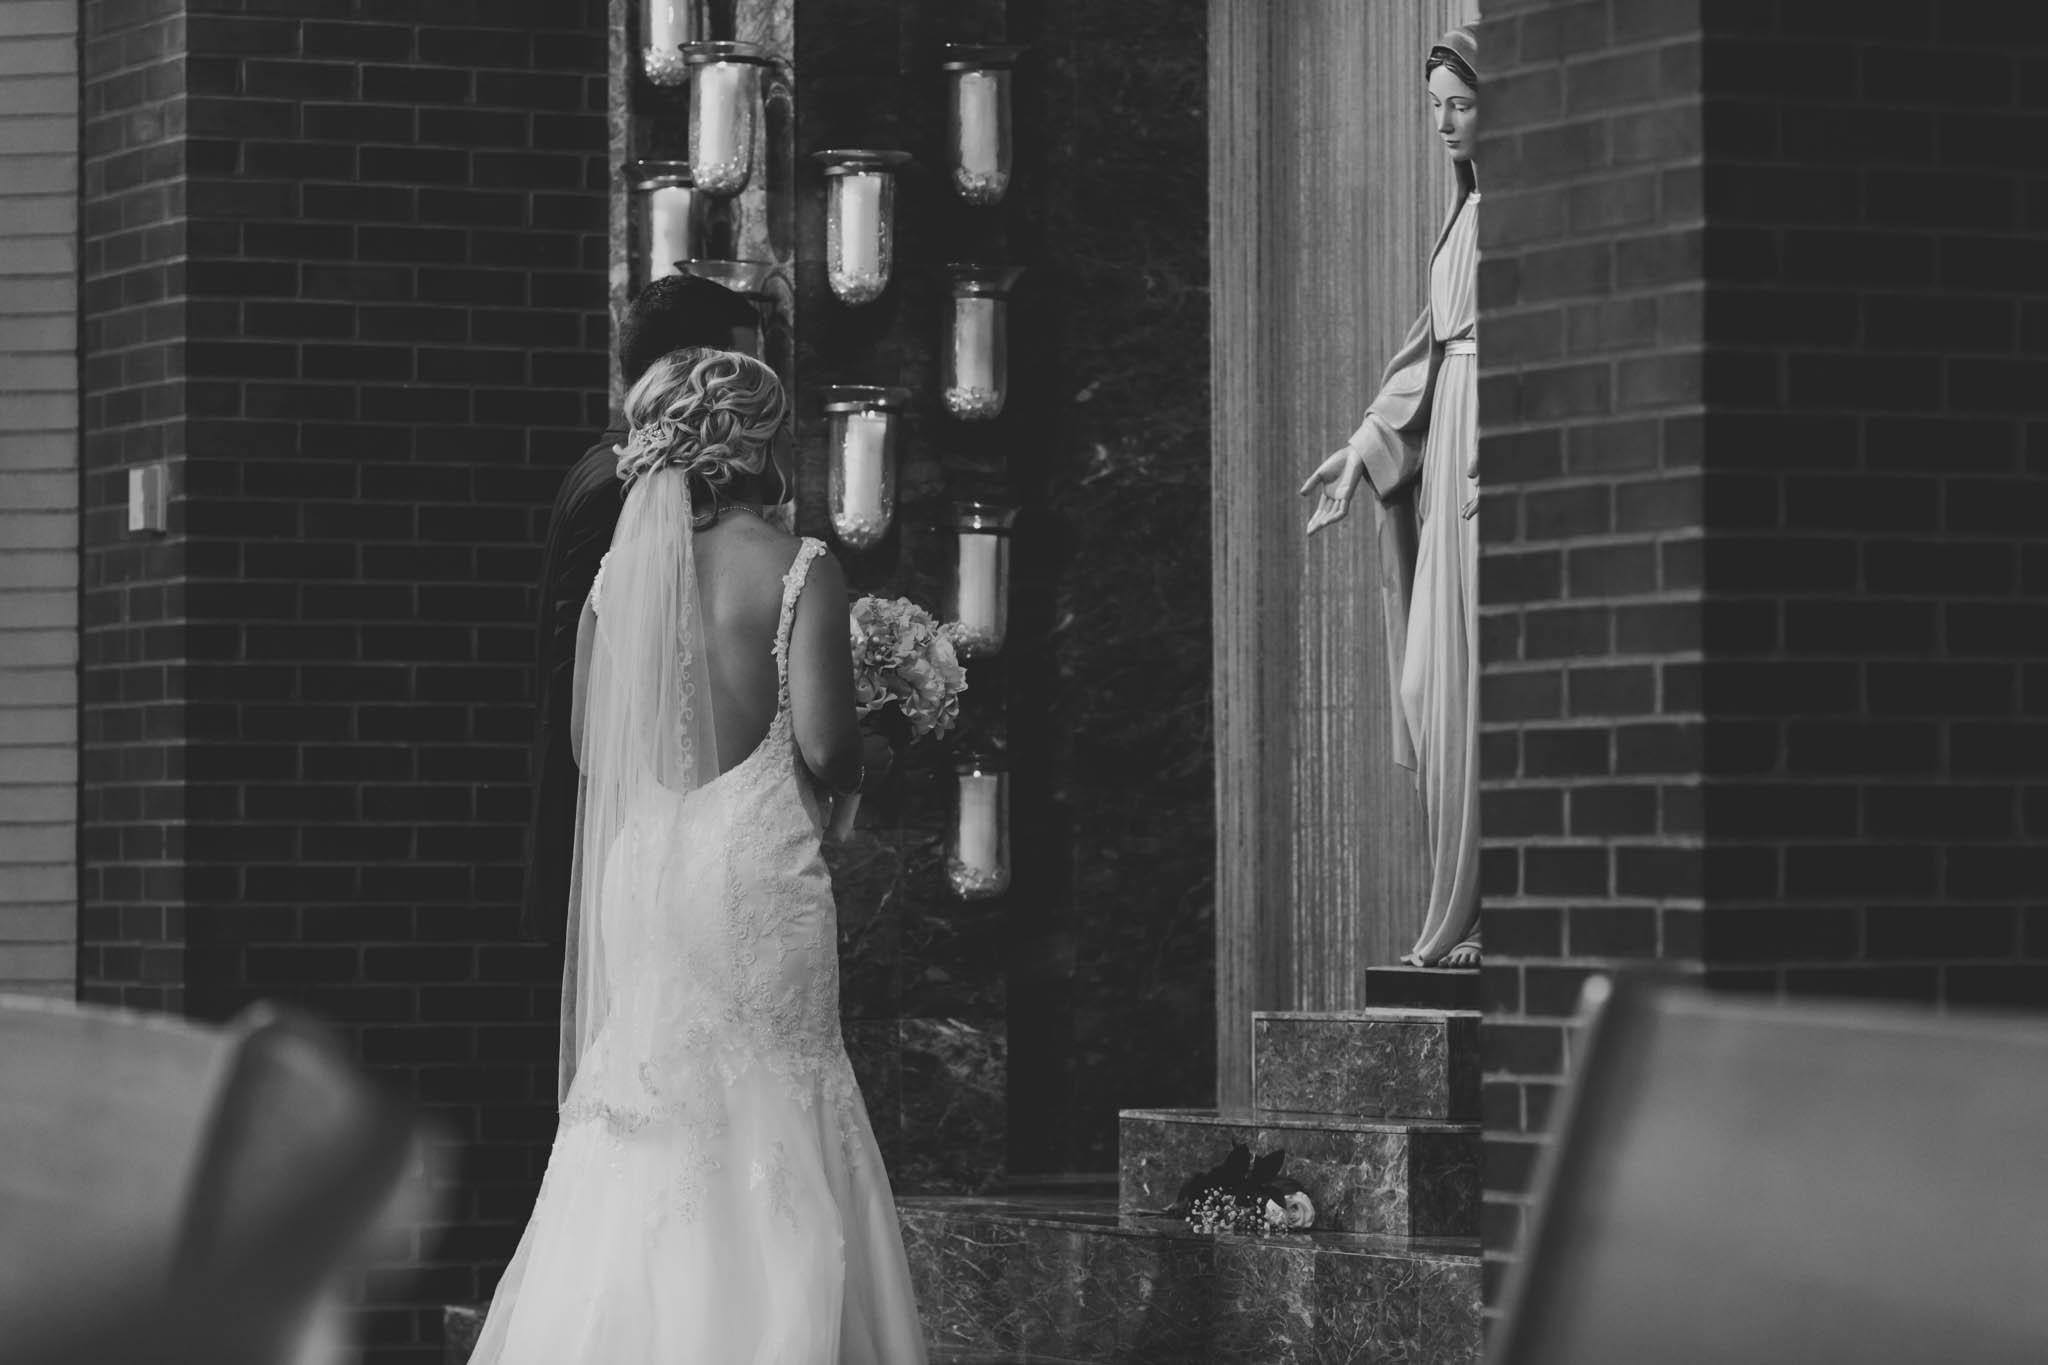 Jillian VanZytveld Photography - Grand Rapids Lifestyle Wedding Photography - 081.jpg